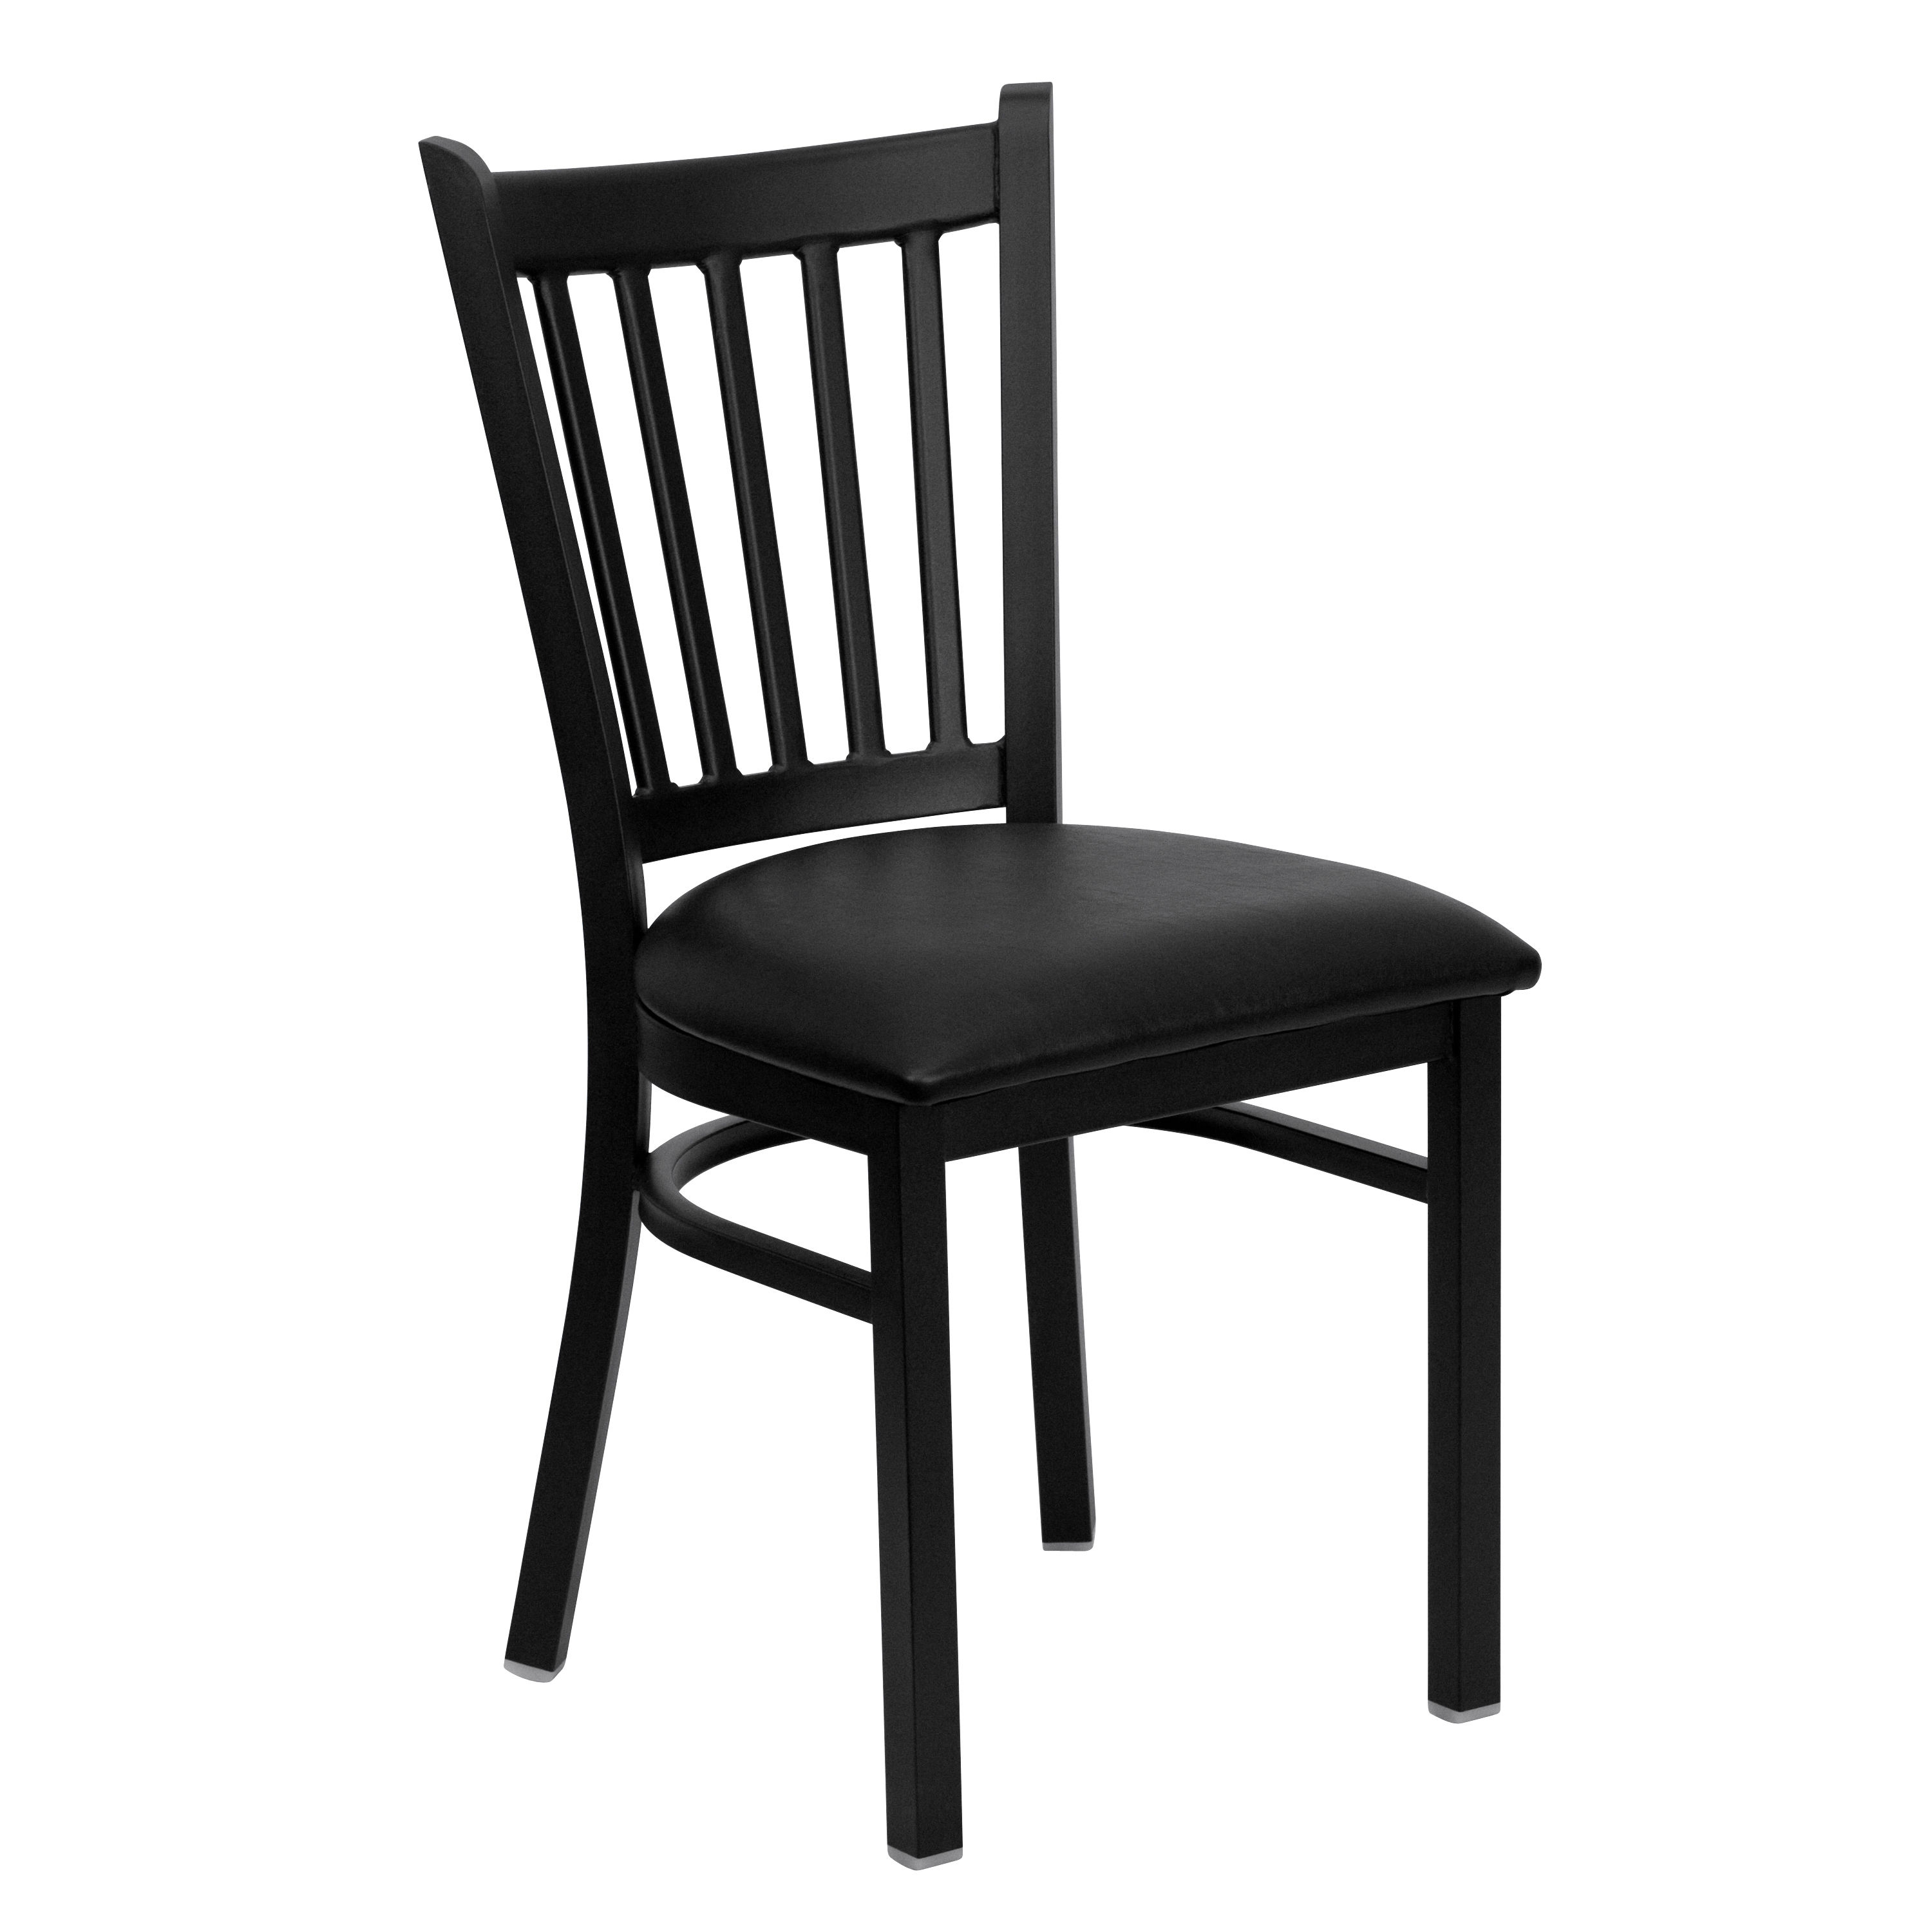 Black Vertical Back Metal Restaurant Chair with Black Vinyl Seat